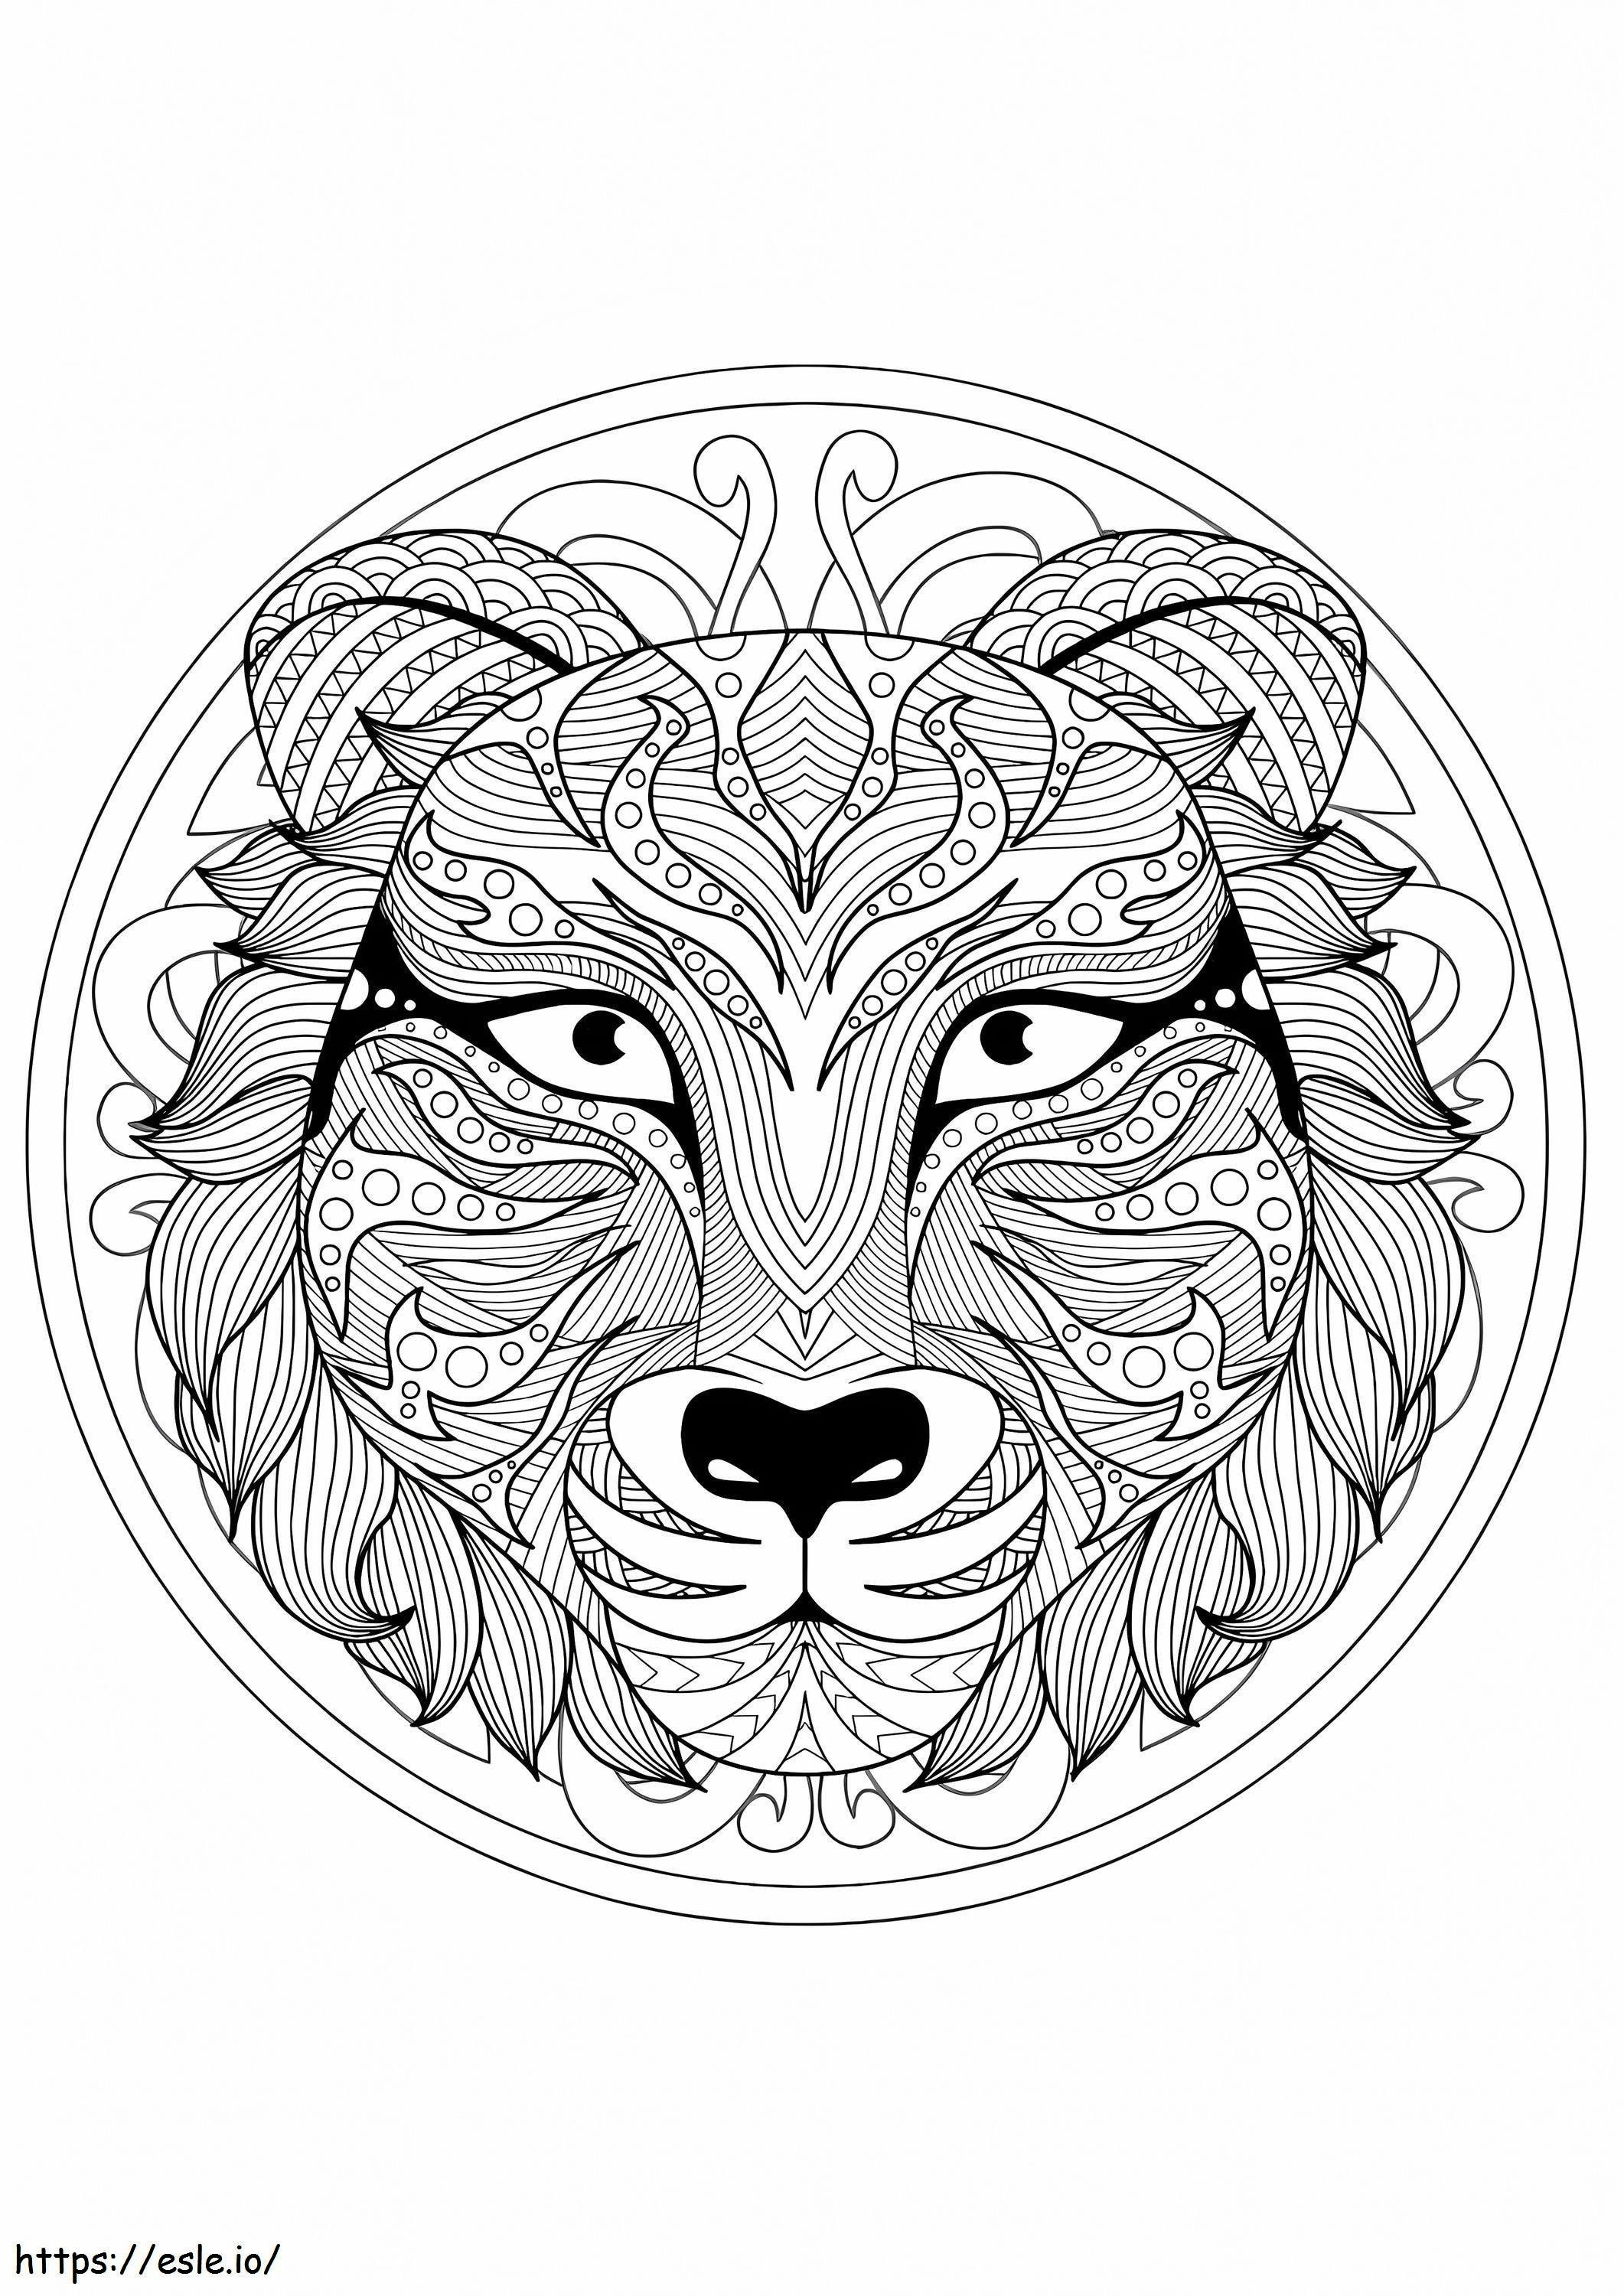 Löwe-Tiere-Mandala ausmalbilder